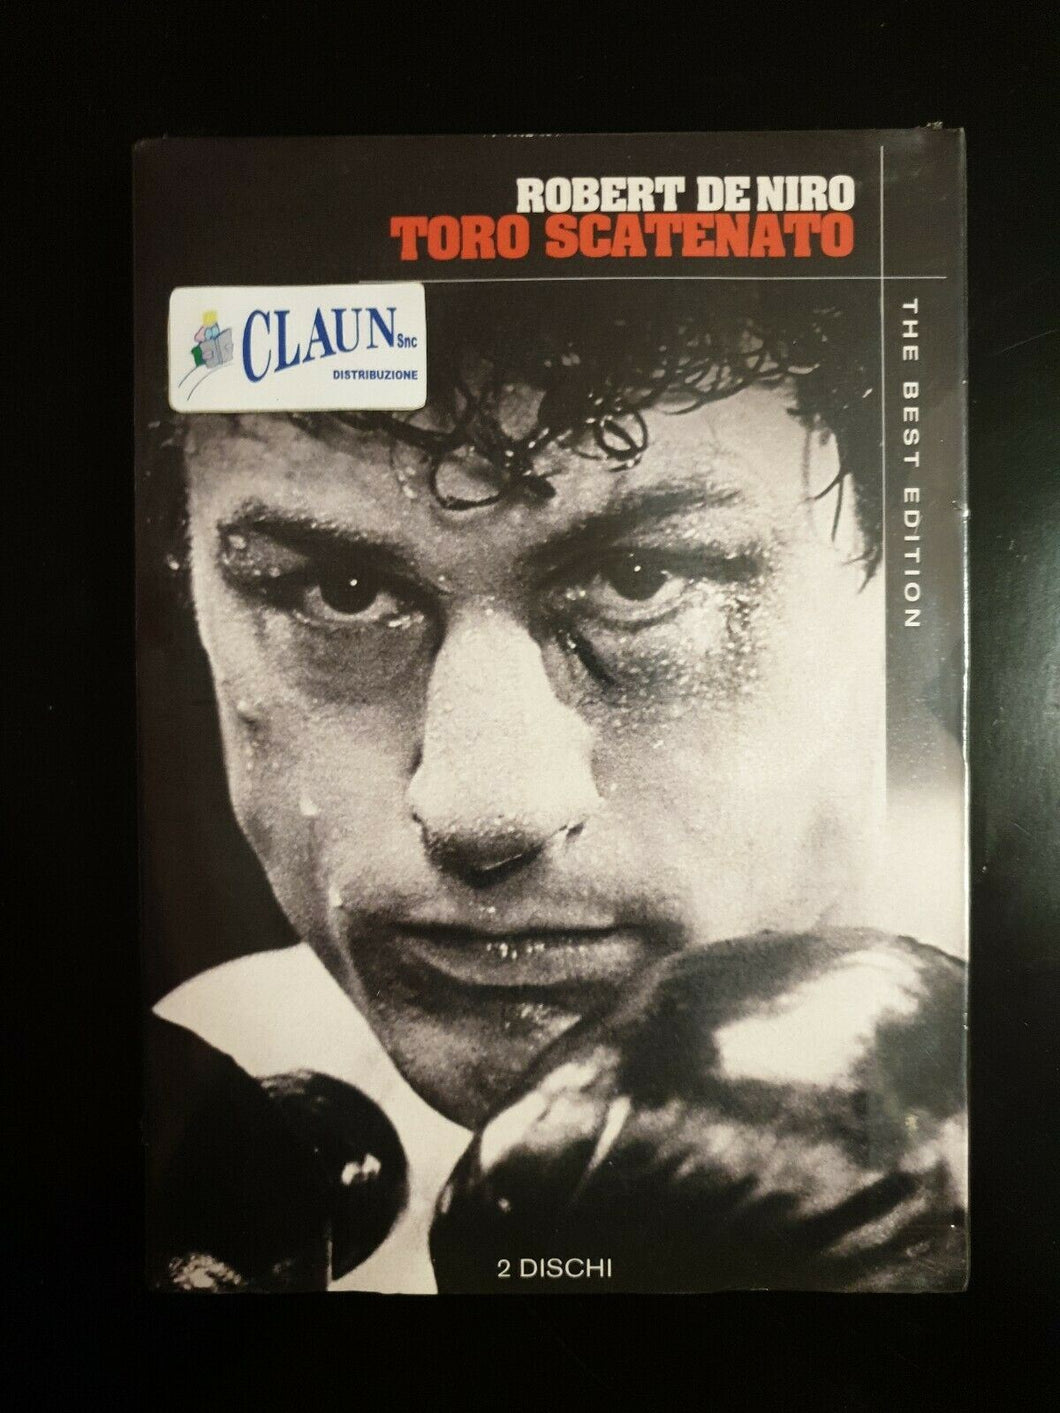 Toro scatenato (1980)  Robert De Niro  2 Dischi  DVD Nuovo